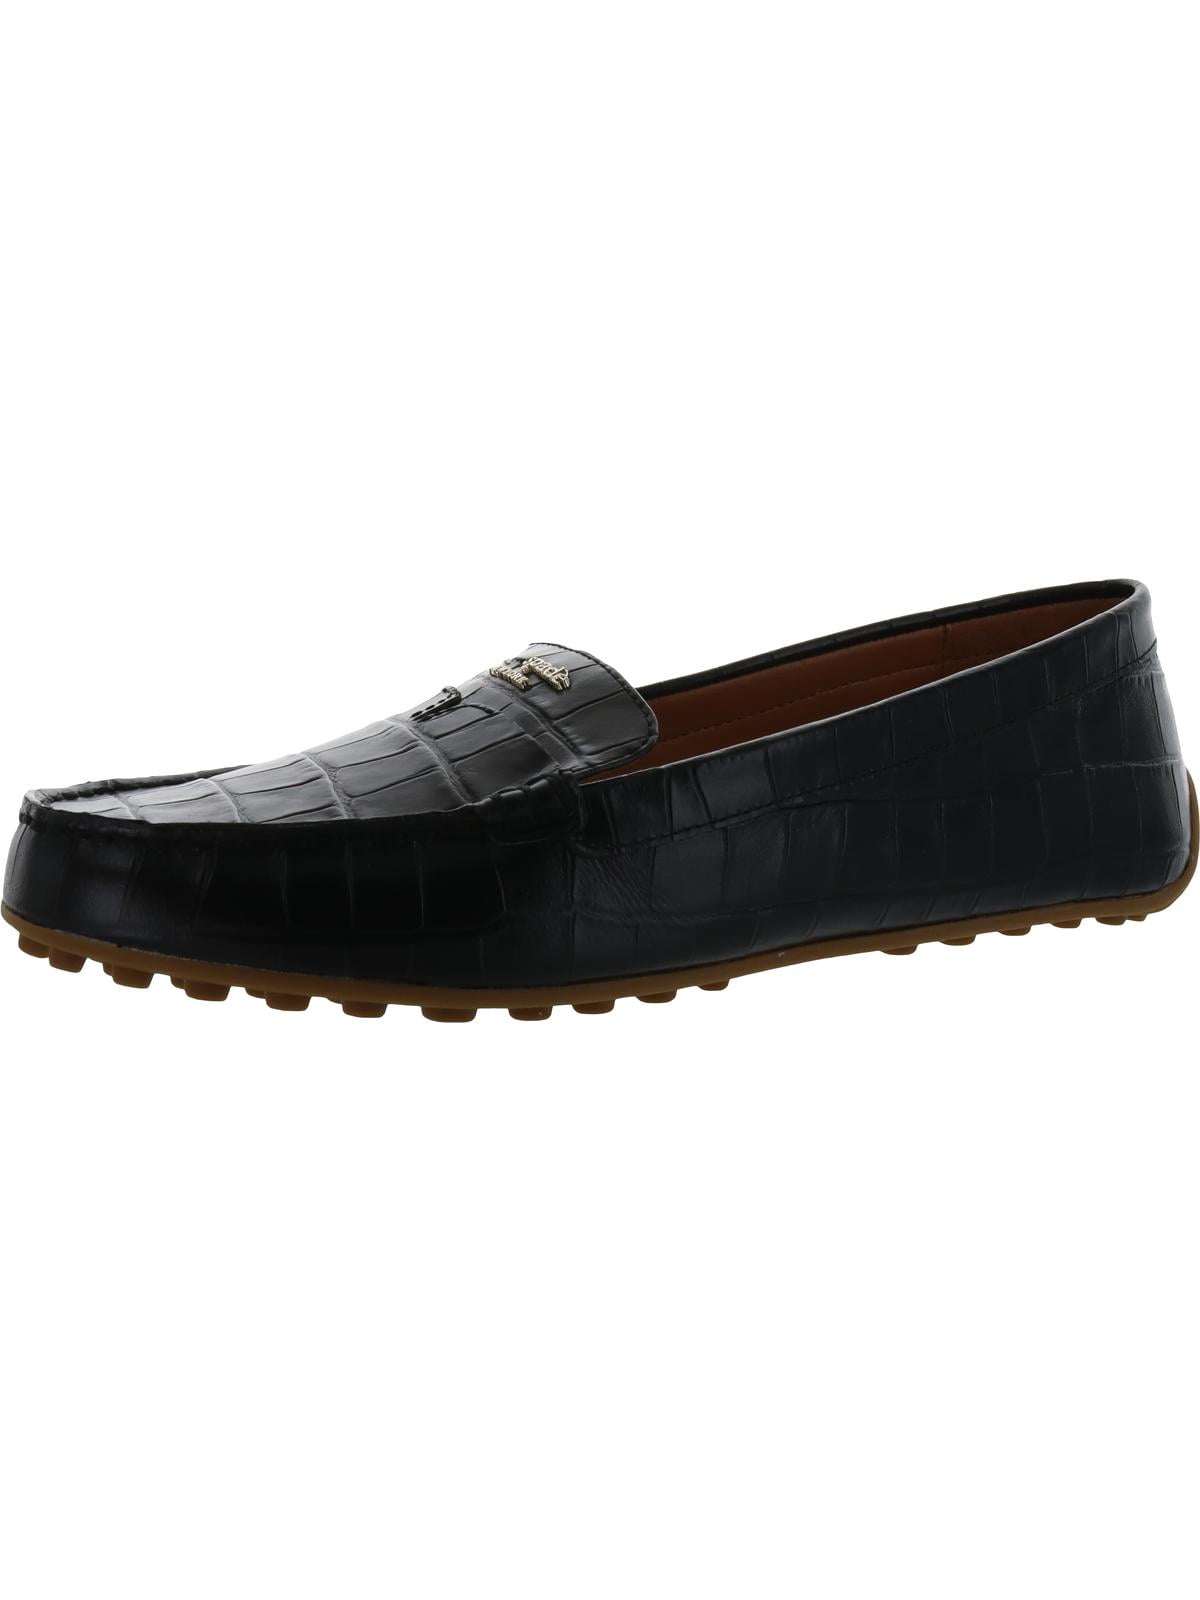 Kate Spade Womens Deck Embossed Leather Loafers Black 8 Medium (B,M) -  